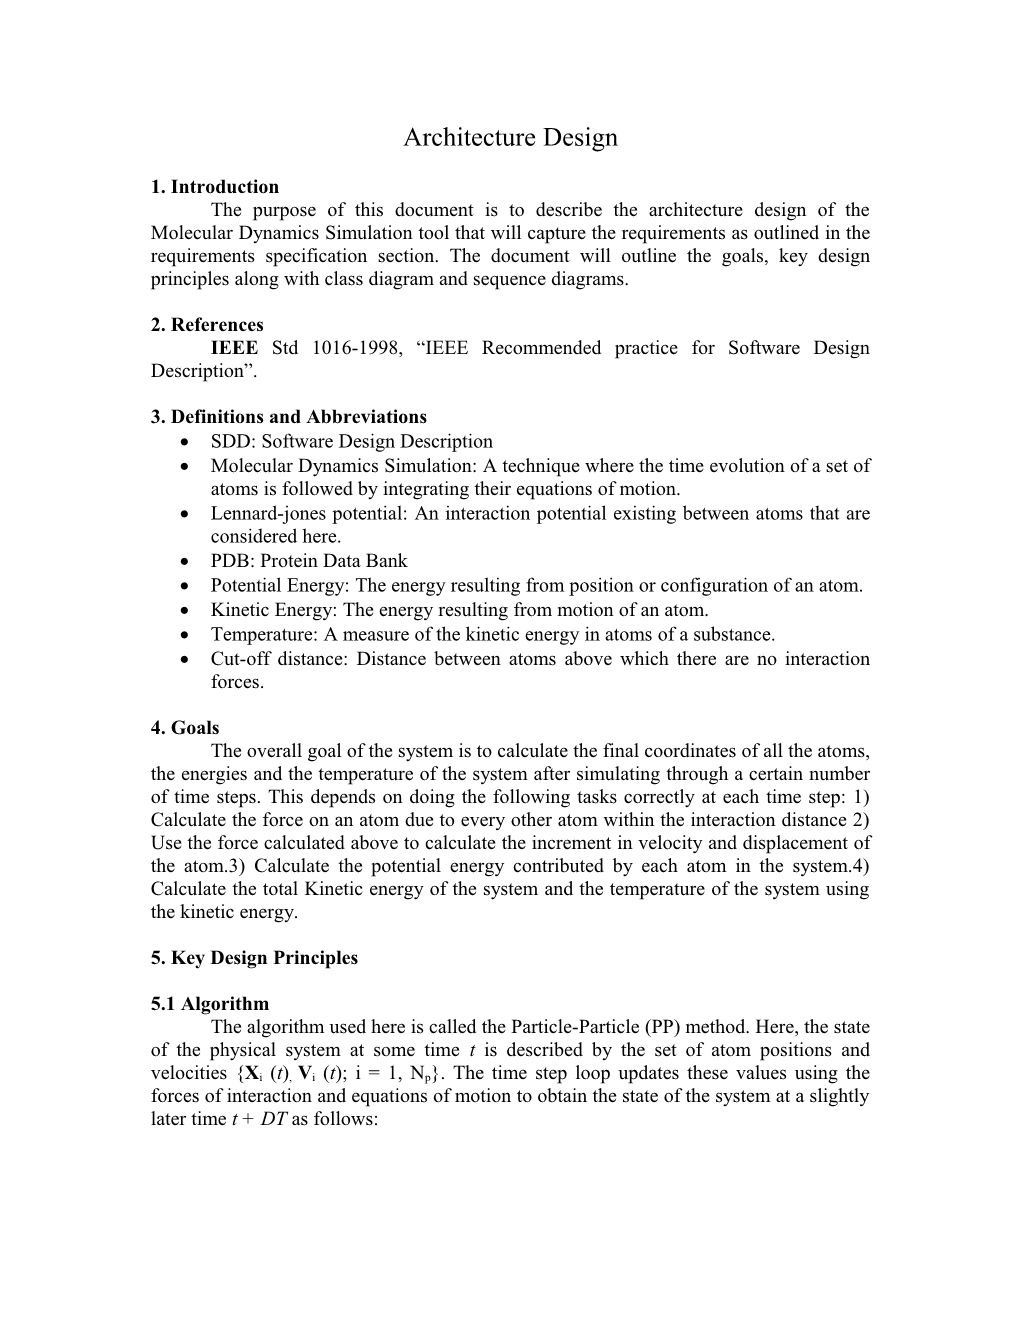 IEEE Std 1016-1998, IEEE Recommended Practice for Software Design Description